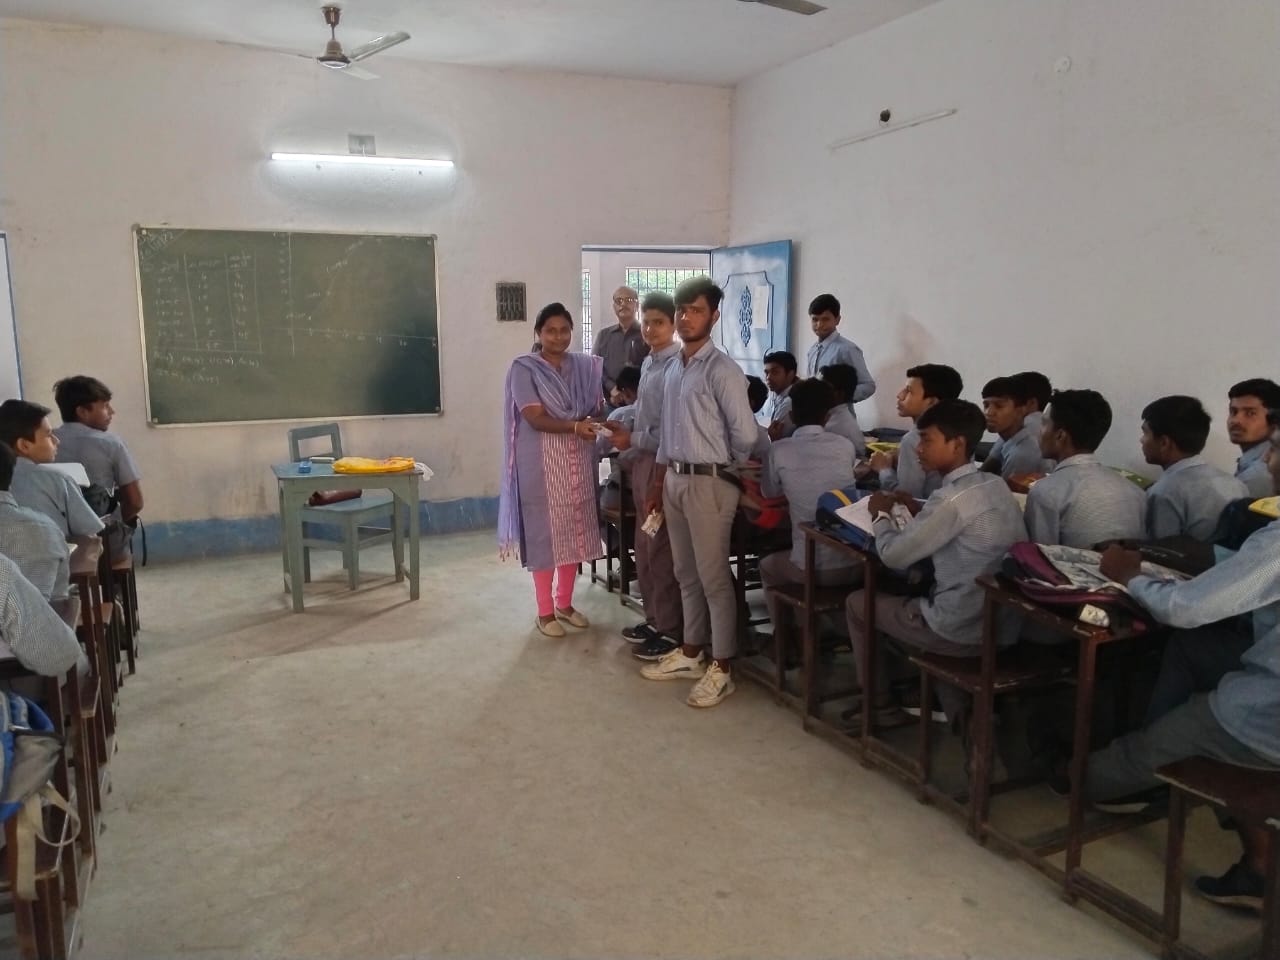 Distribution of Geometry Box to the students of Gurunanak School under Literacy Program.